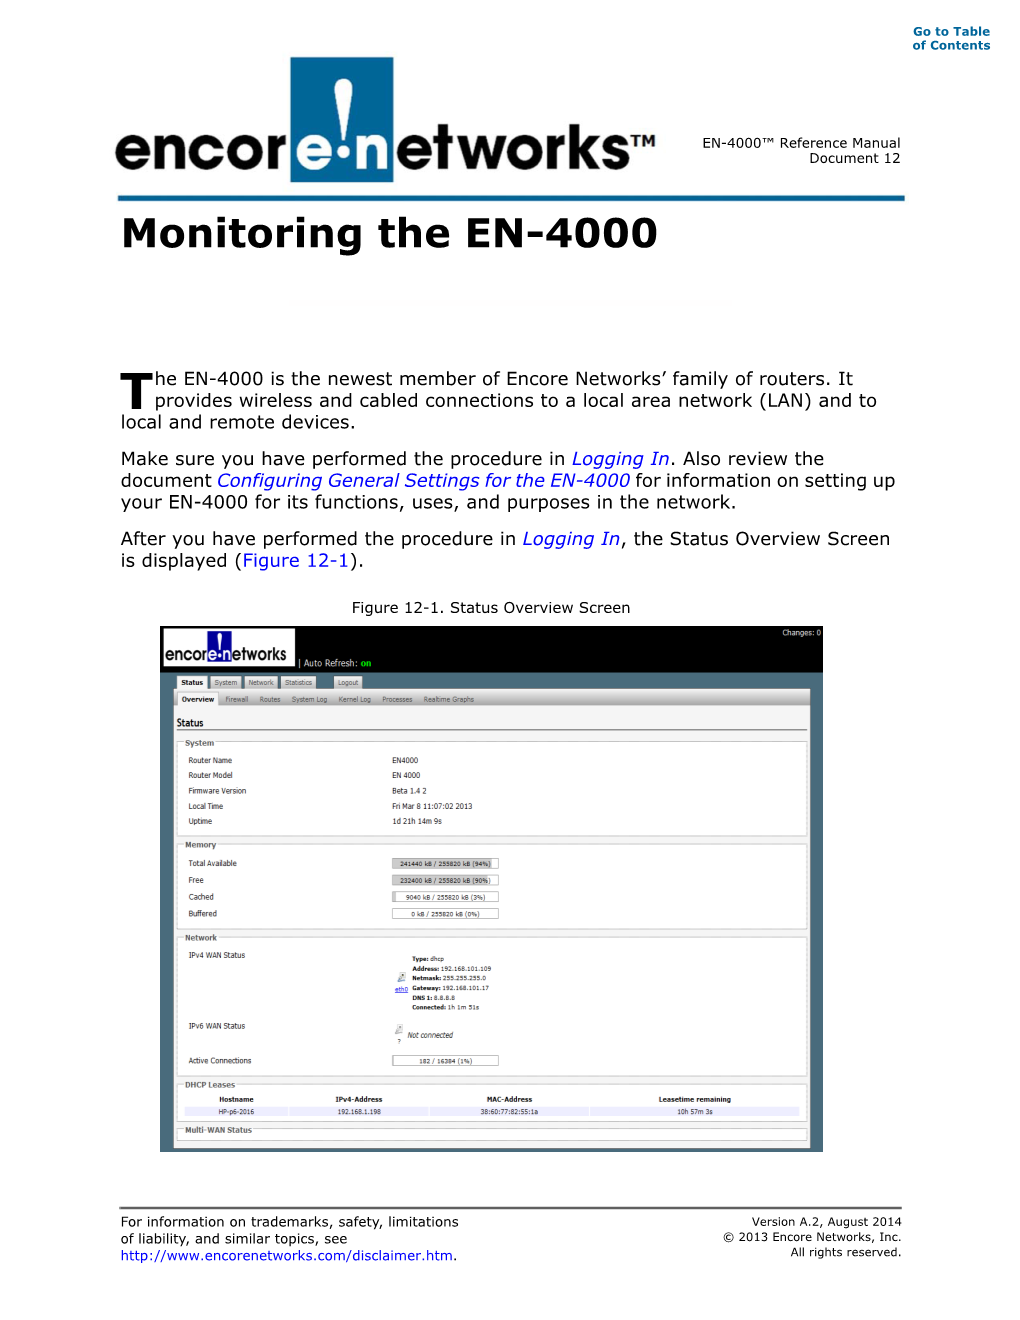 Monitoring the EN 4000